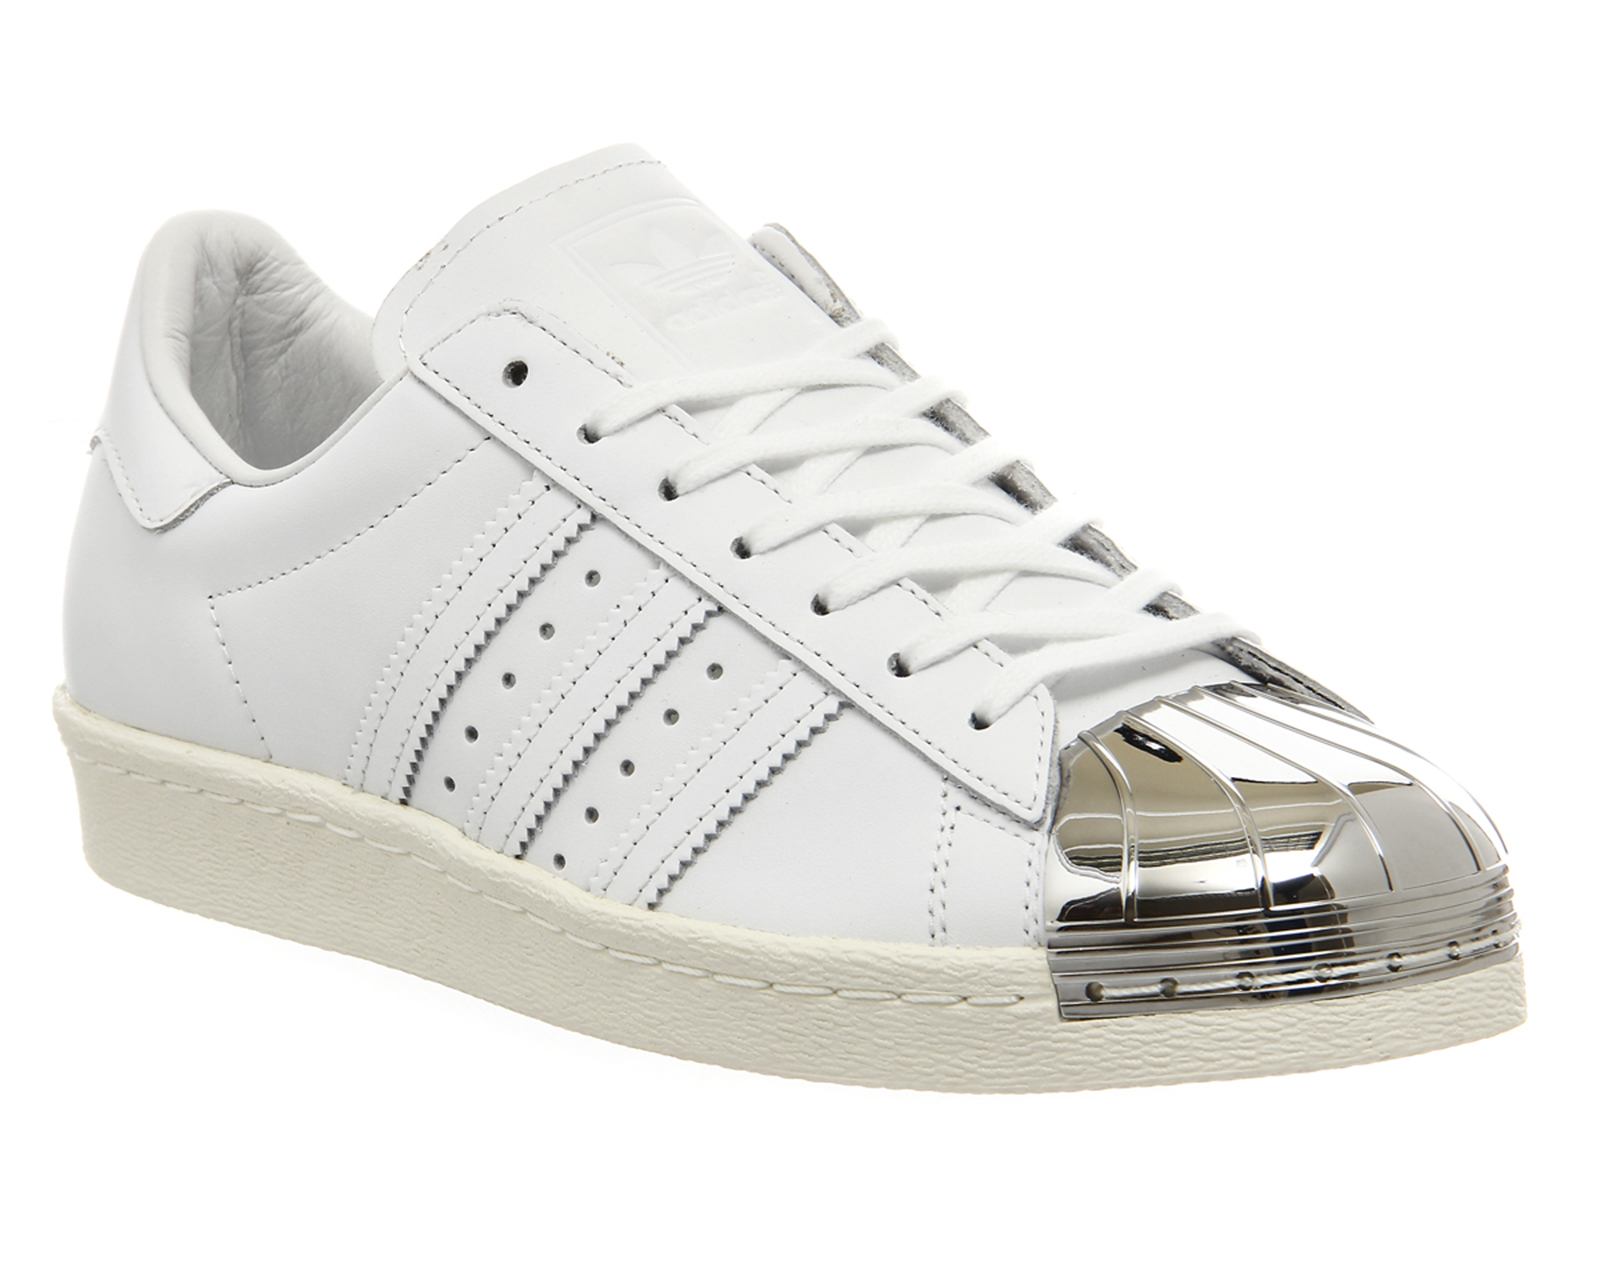 Adidas originals Superstar 80's Metal Toe W in Silver (white) | Lyst